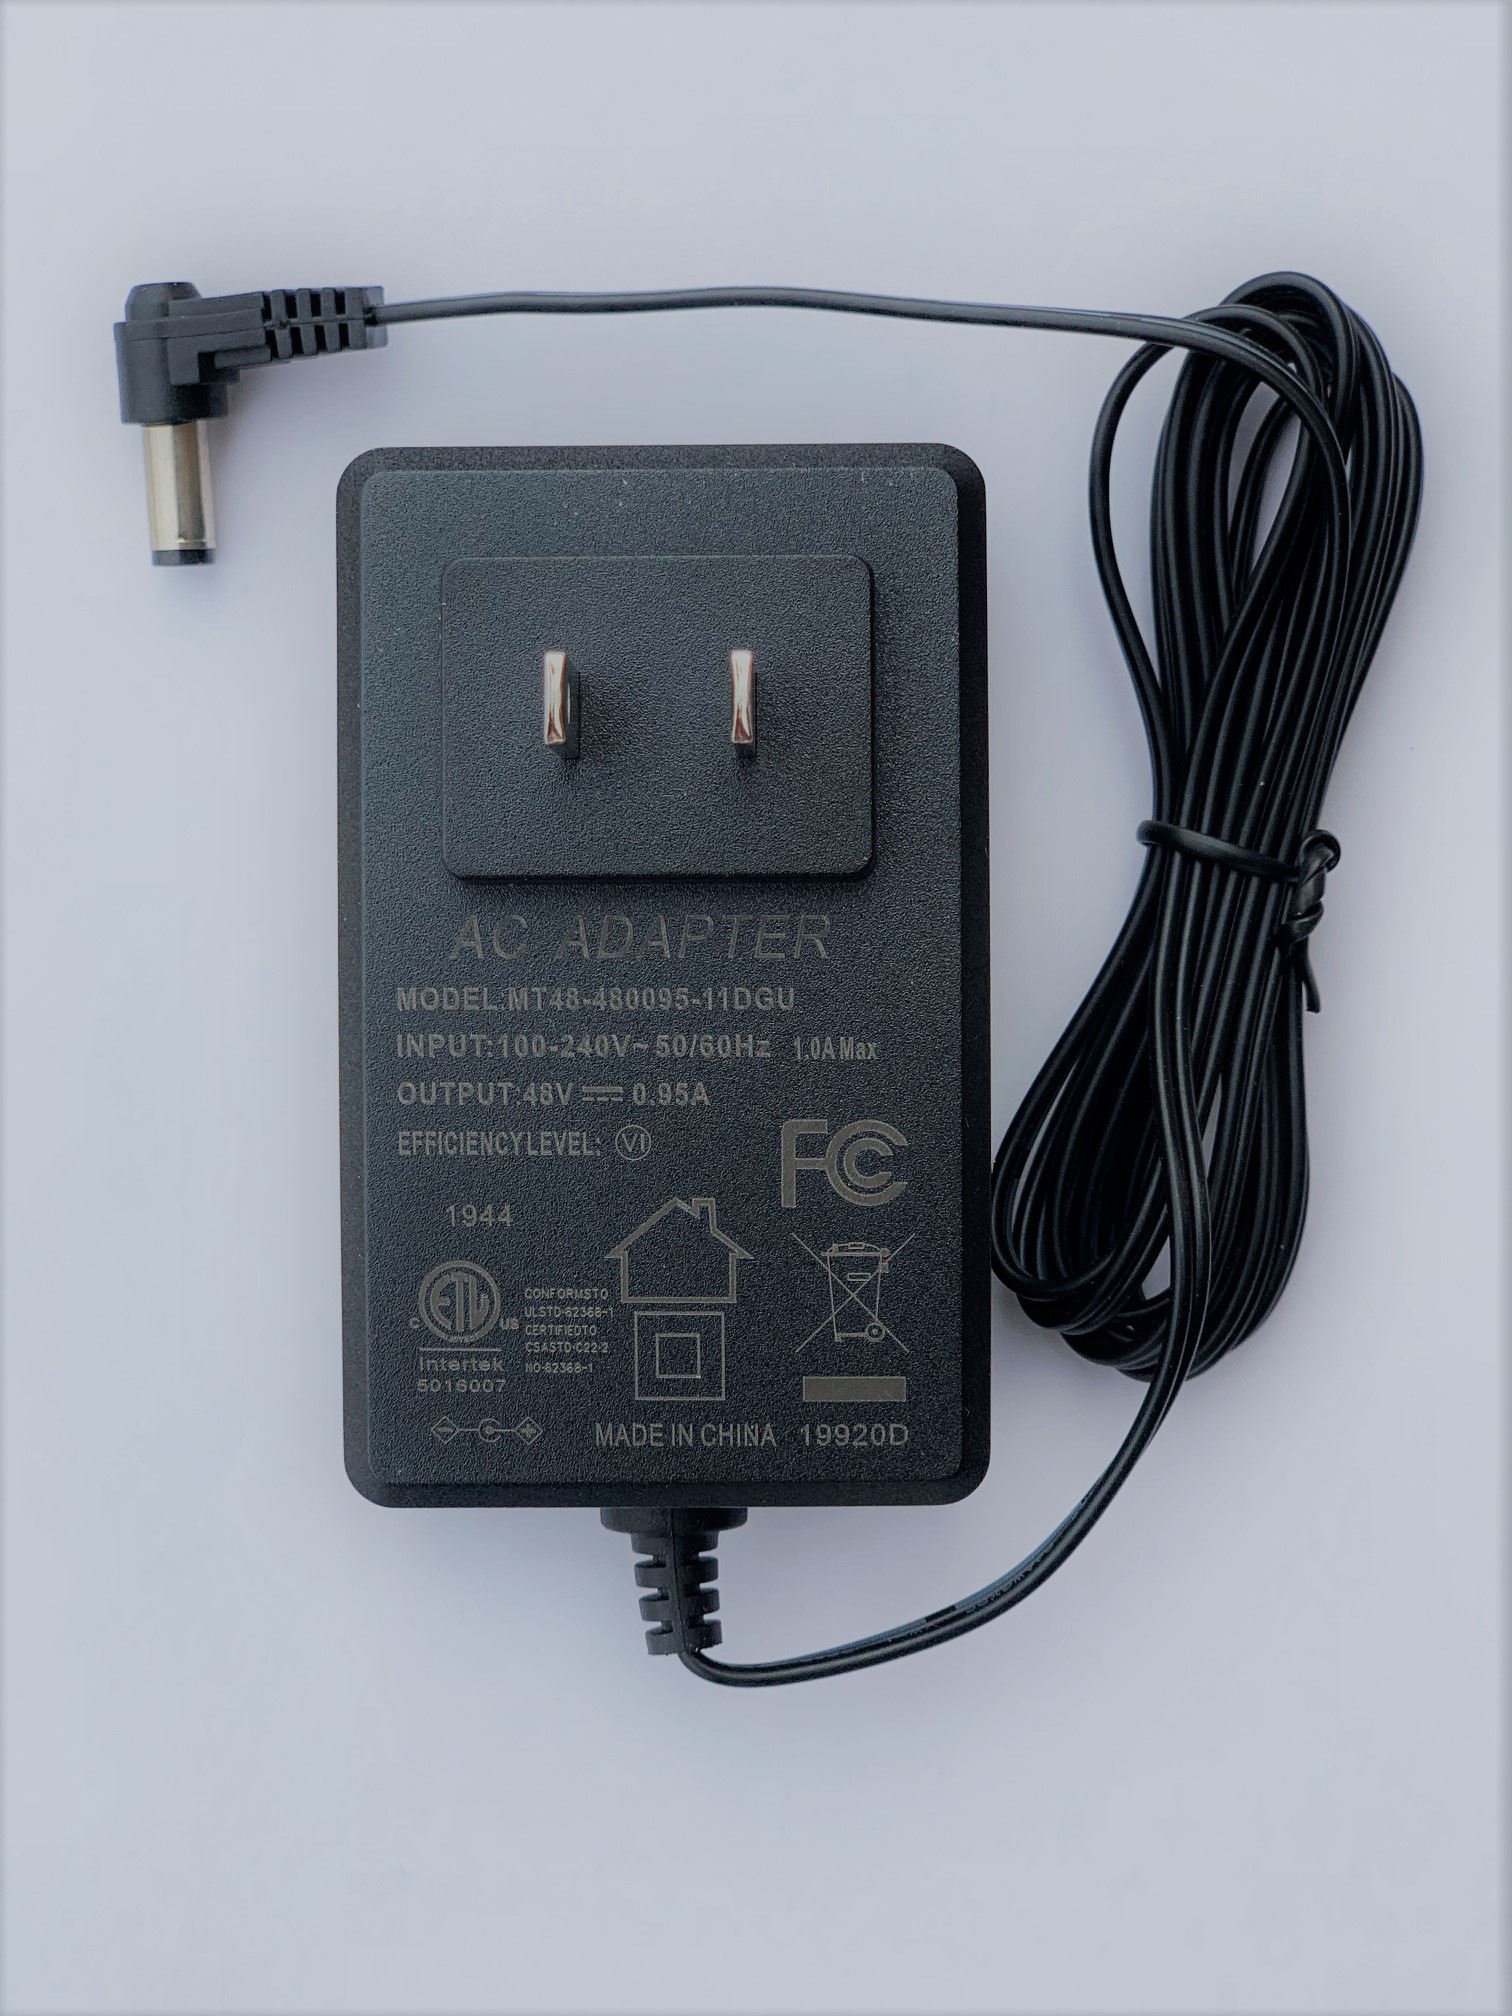 48POW-46-US MT48-480095-11DG Mikrotik 48vdc, 45.6 watt universal switching power supply wirth 2.1mm DC plug and Type A USA plug